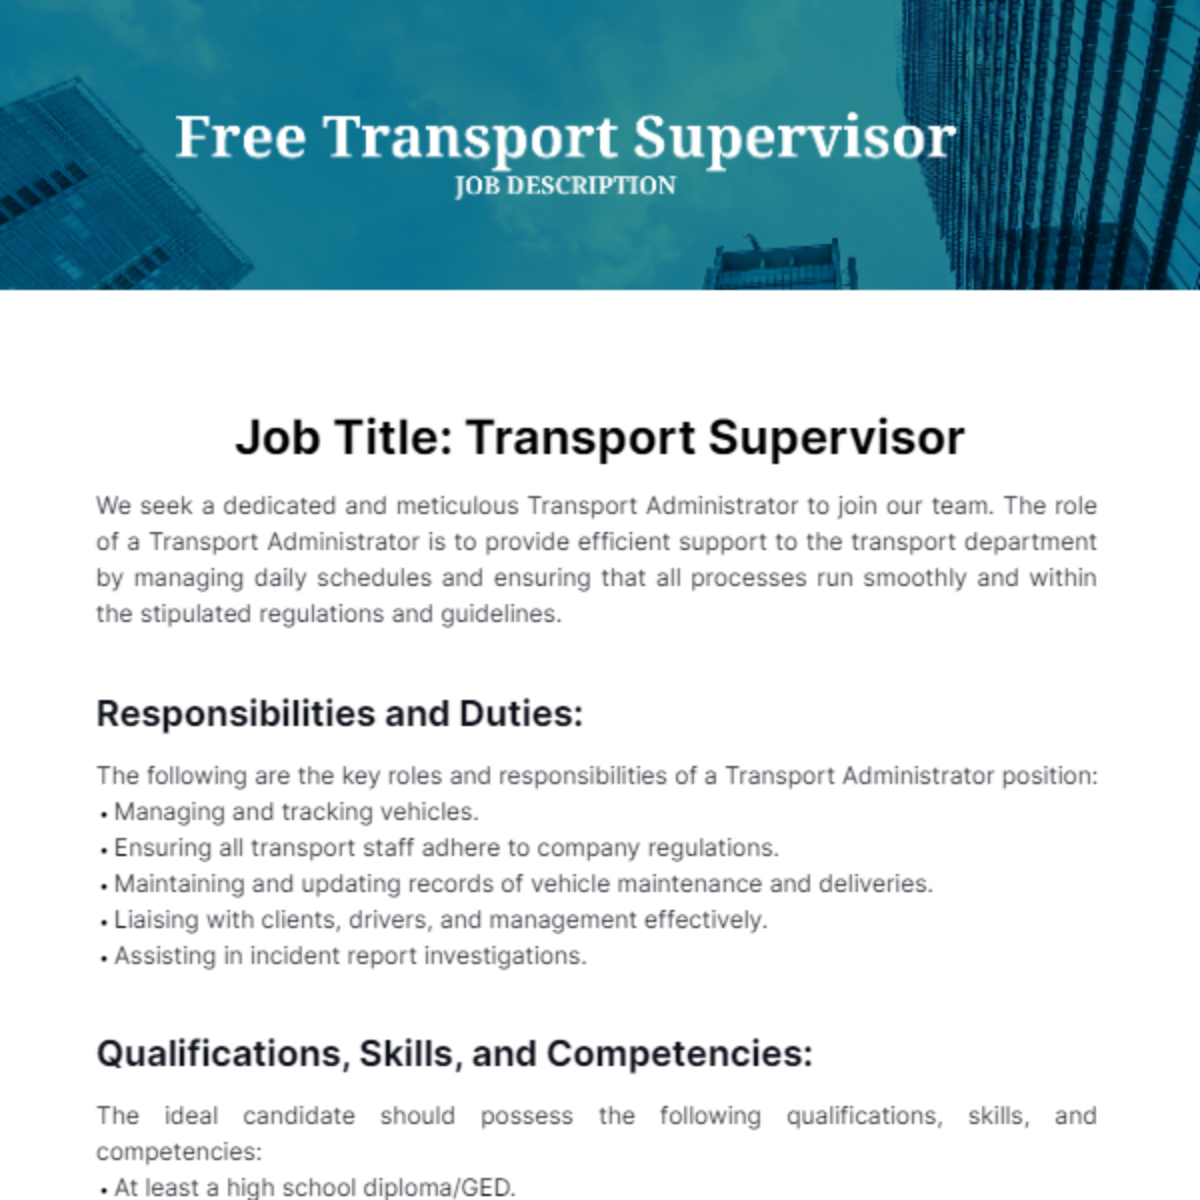 Free Transport Supervisor Job Description Template